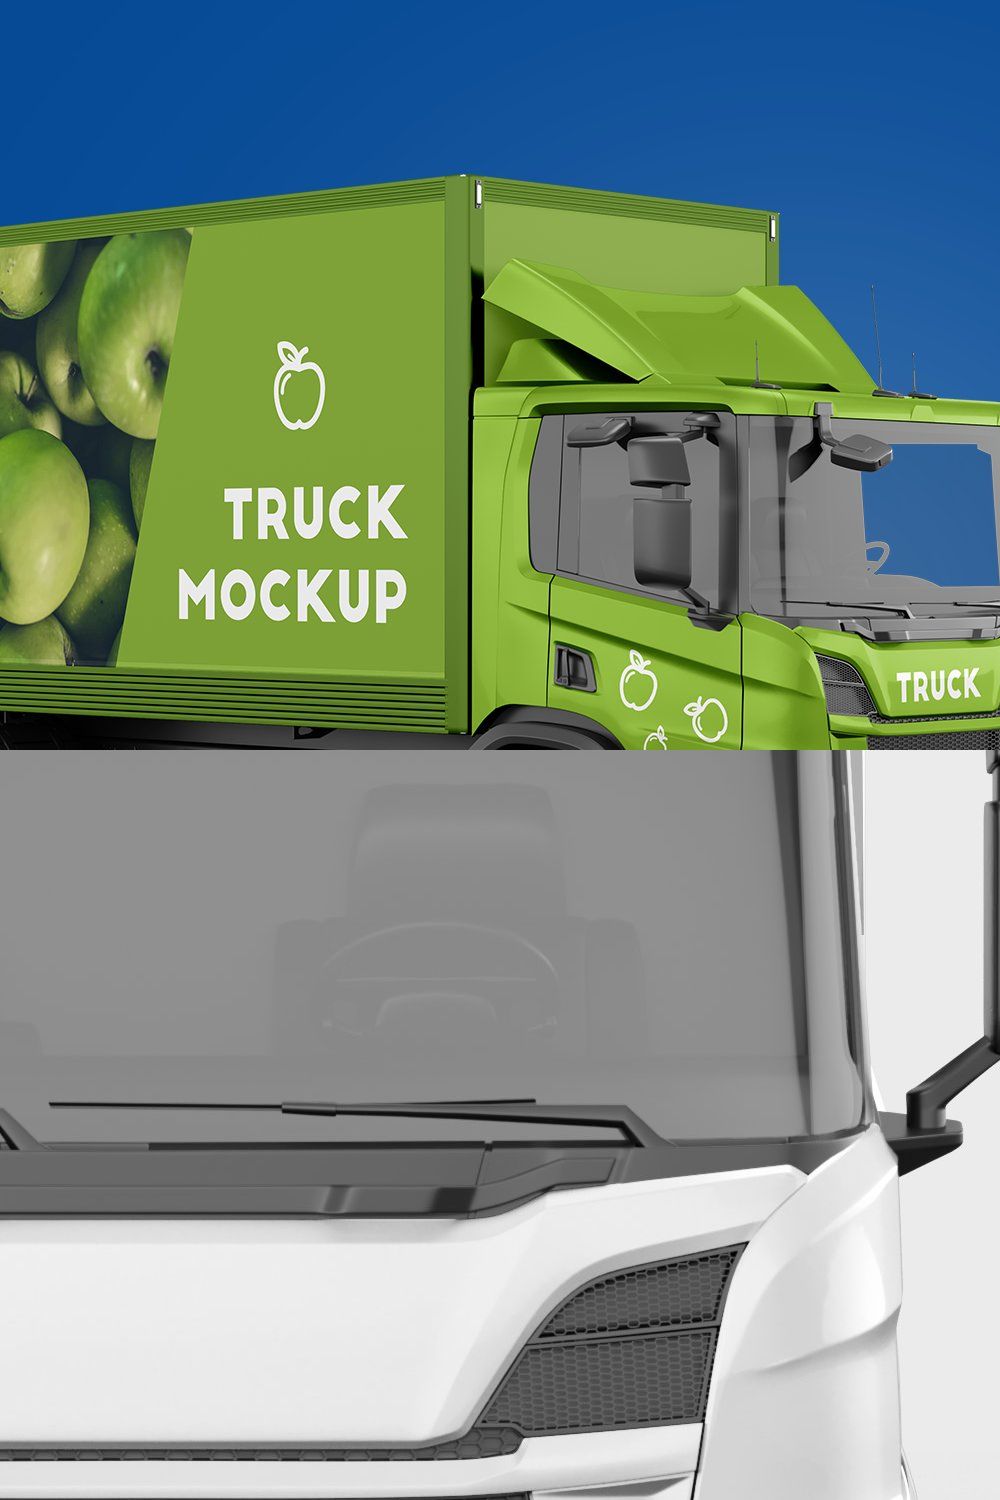 Truck Mockup 3 pinterest preview image.